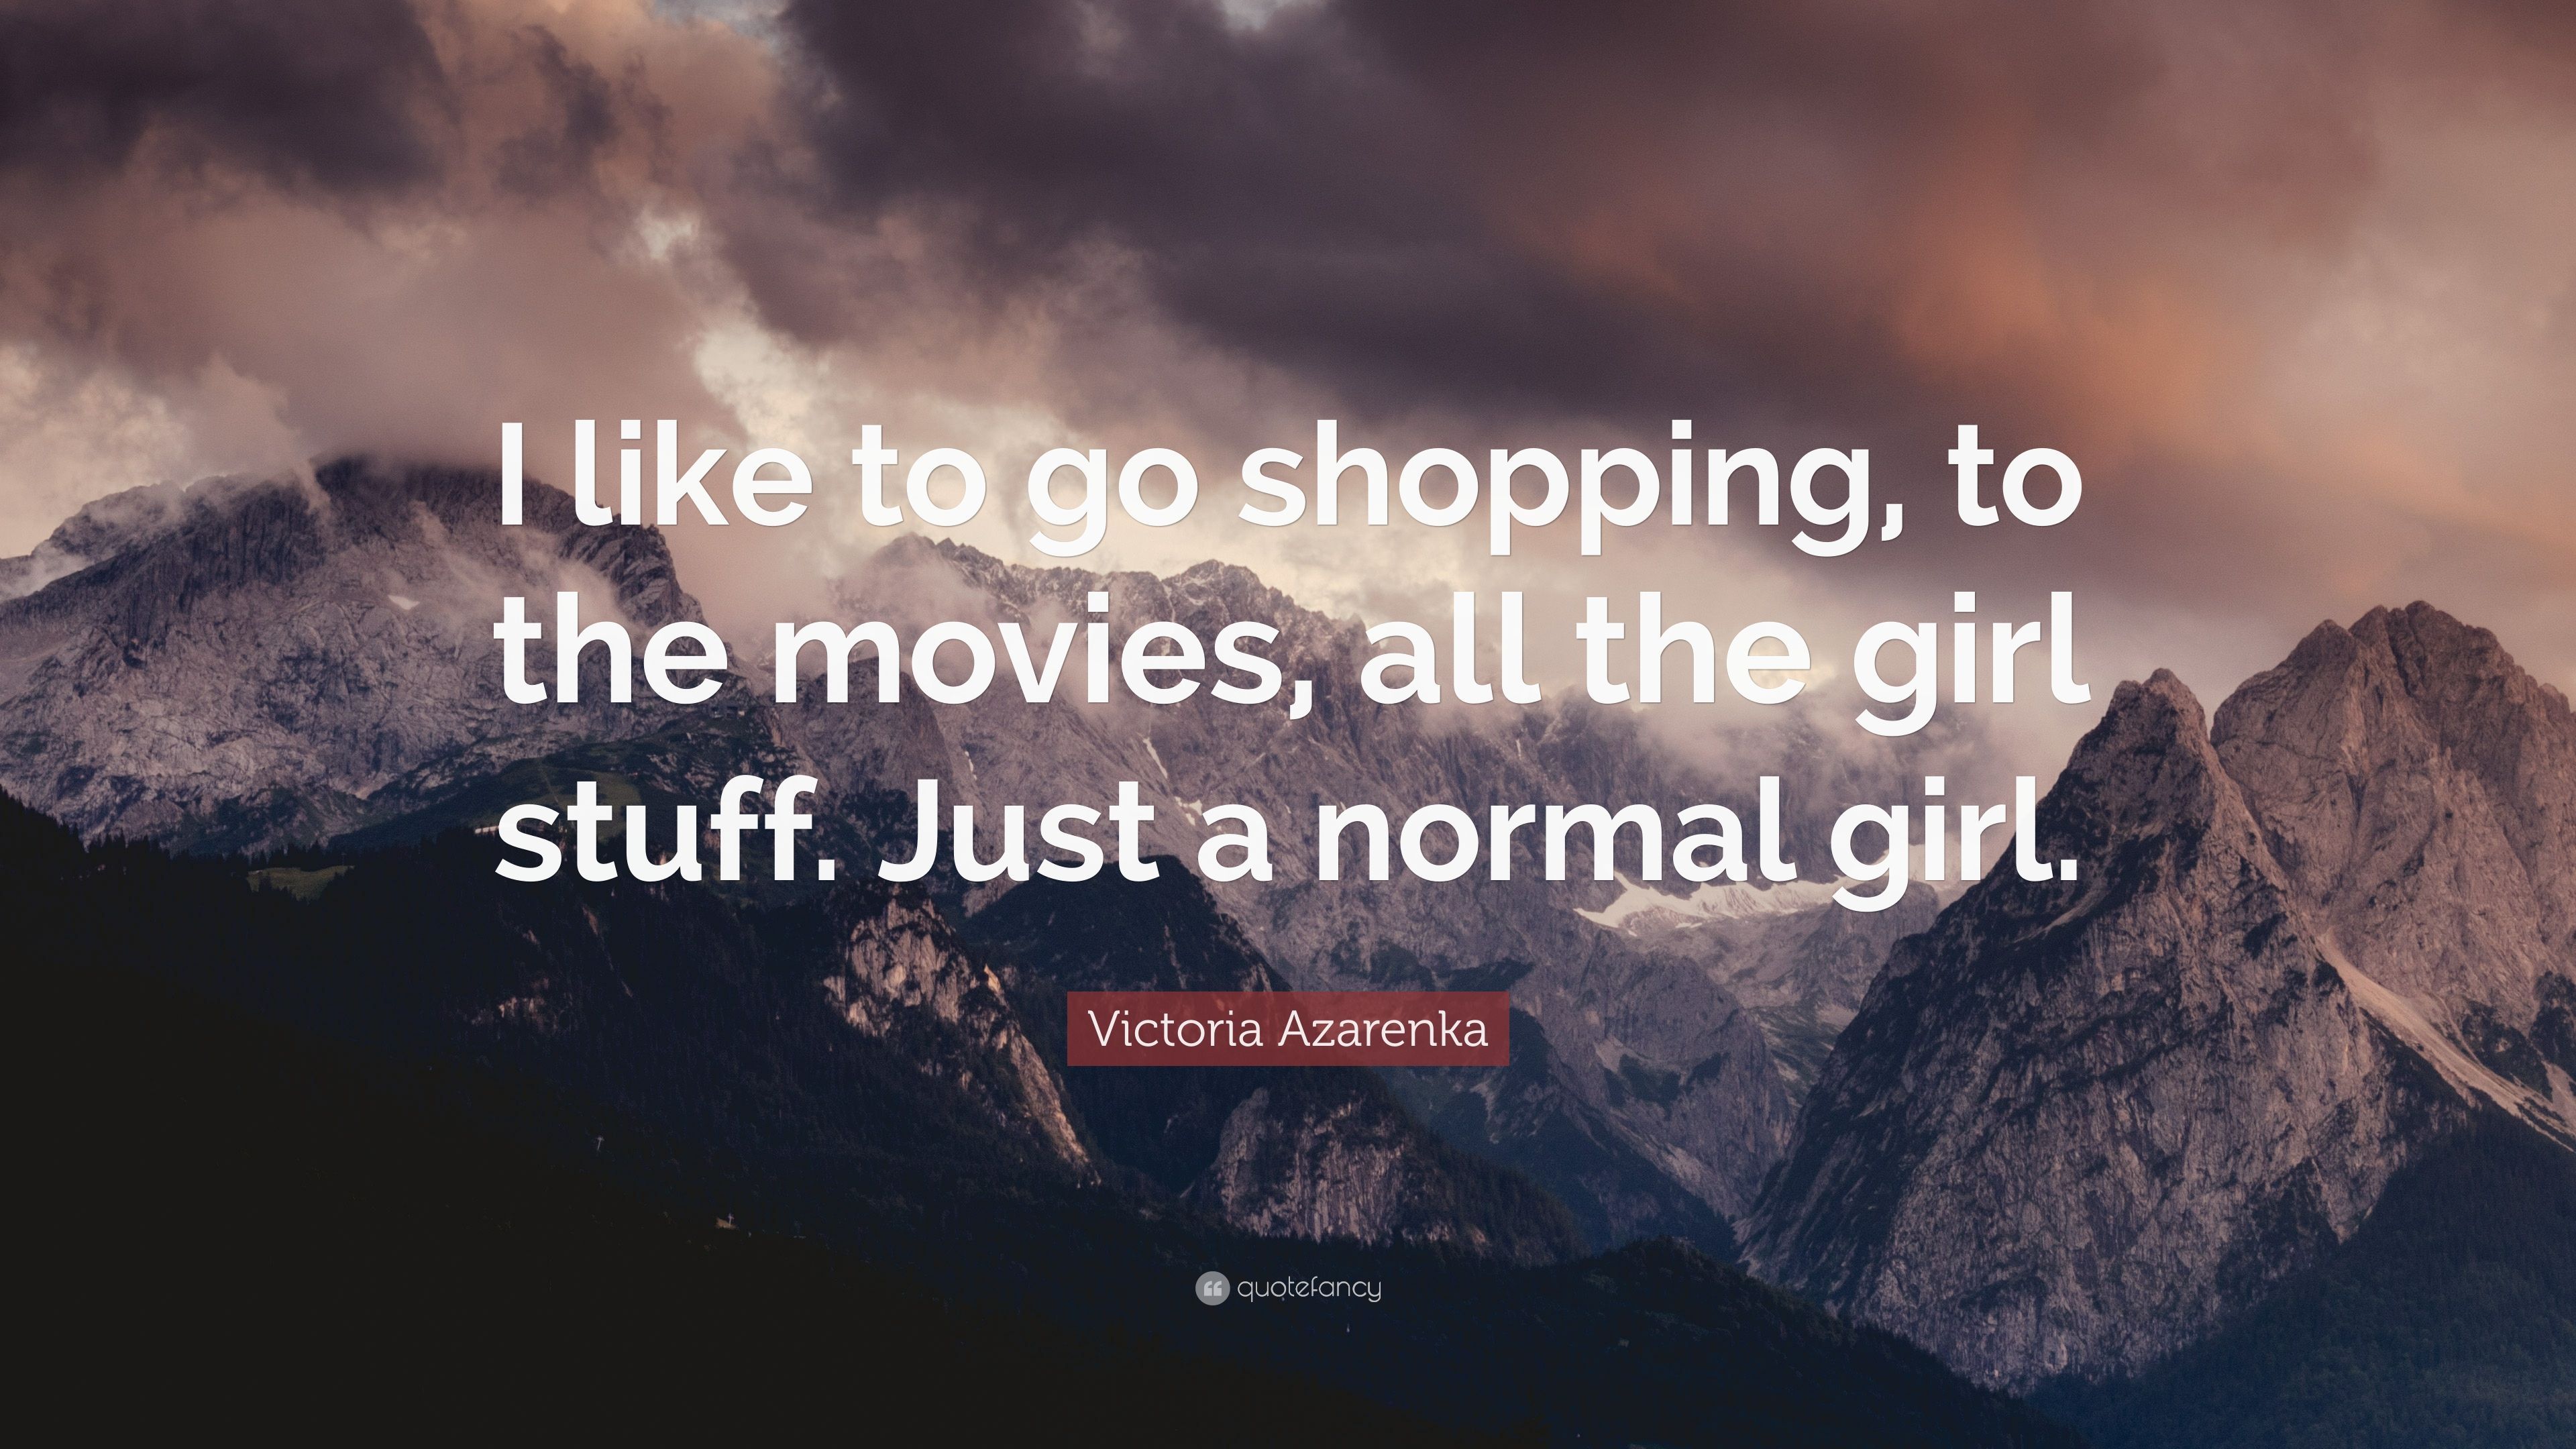 Victoria Azarenka Quote: “I like to go shopping, to the movies